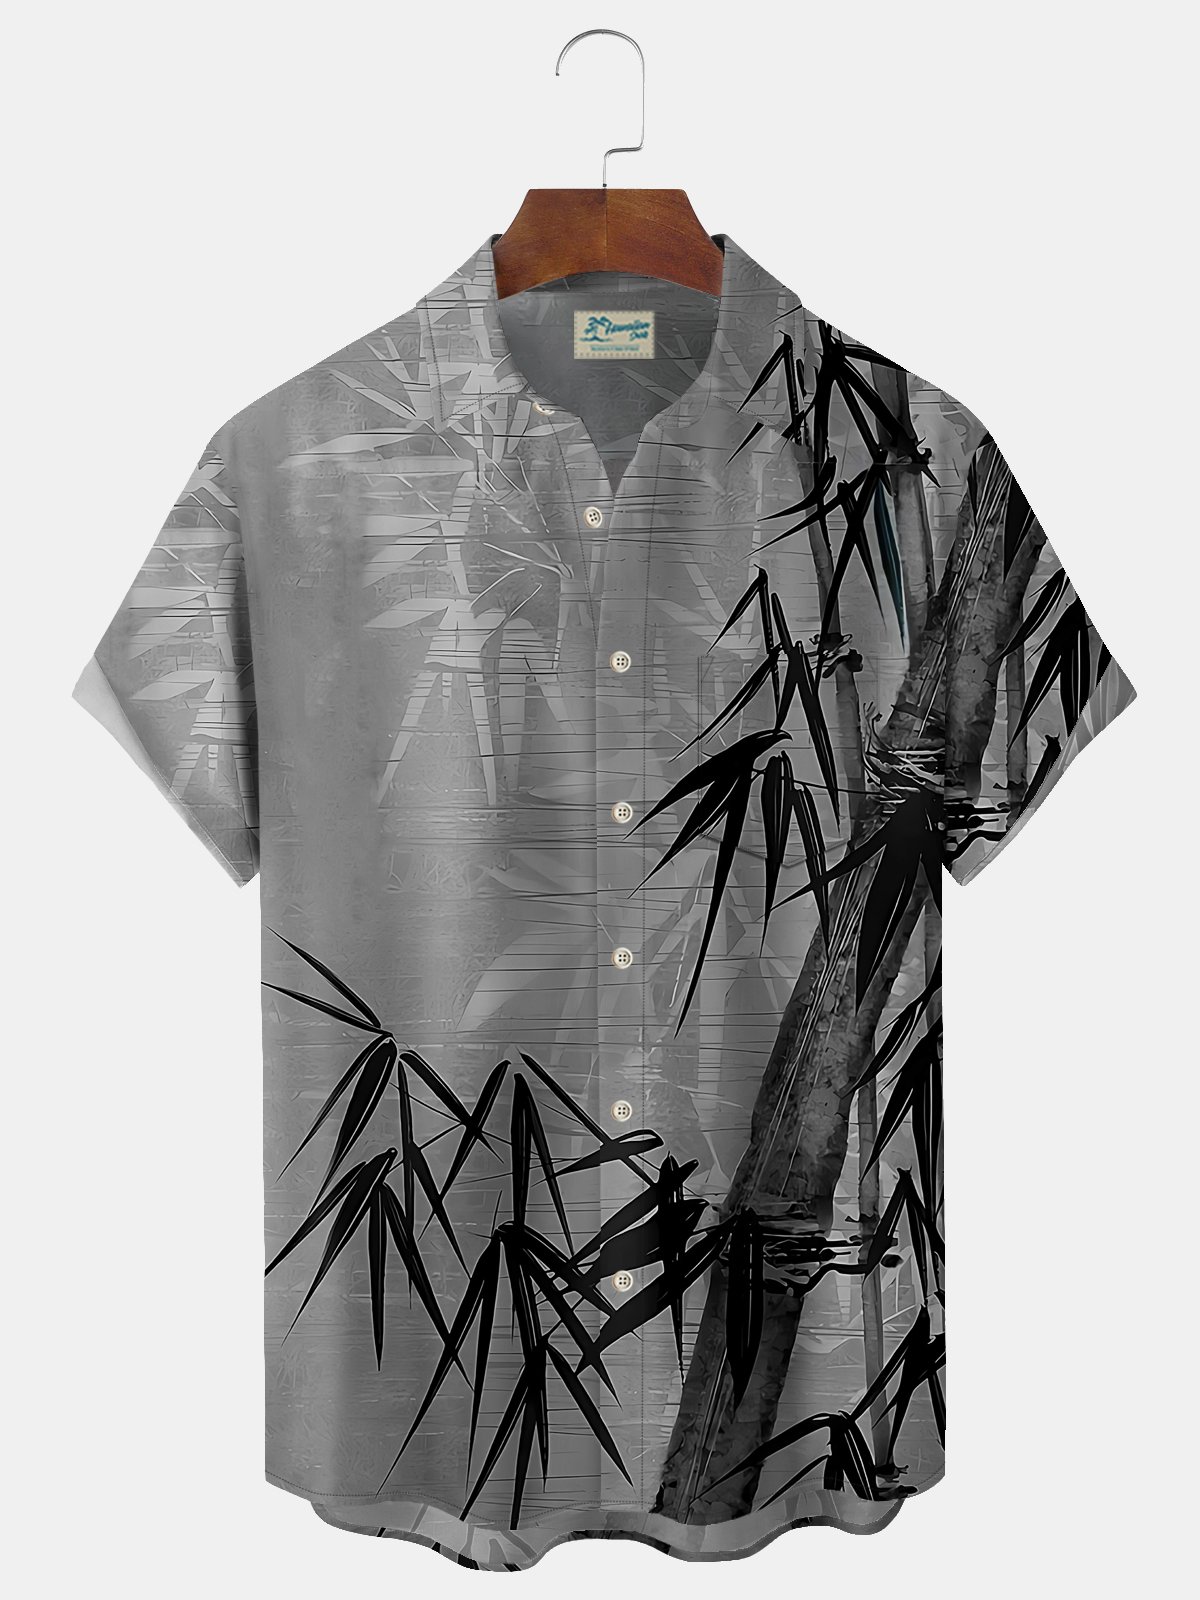 Royaura Vintage Bamboo Print Men's Button Pocket Shirt